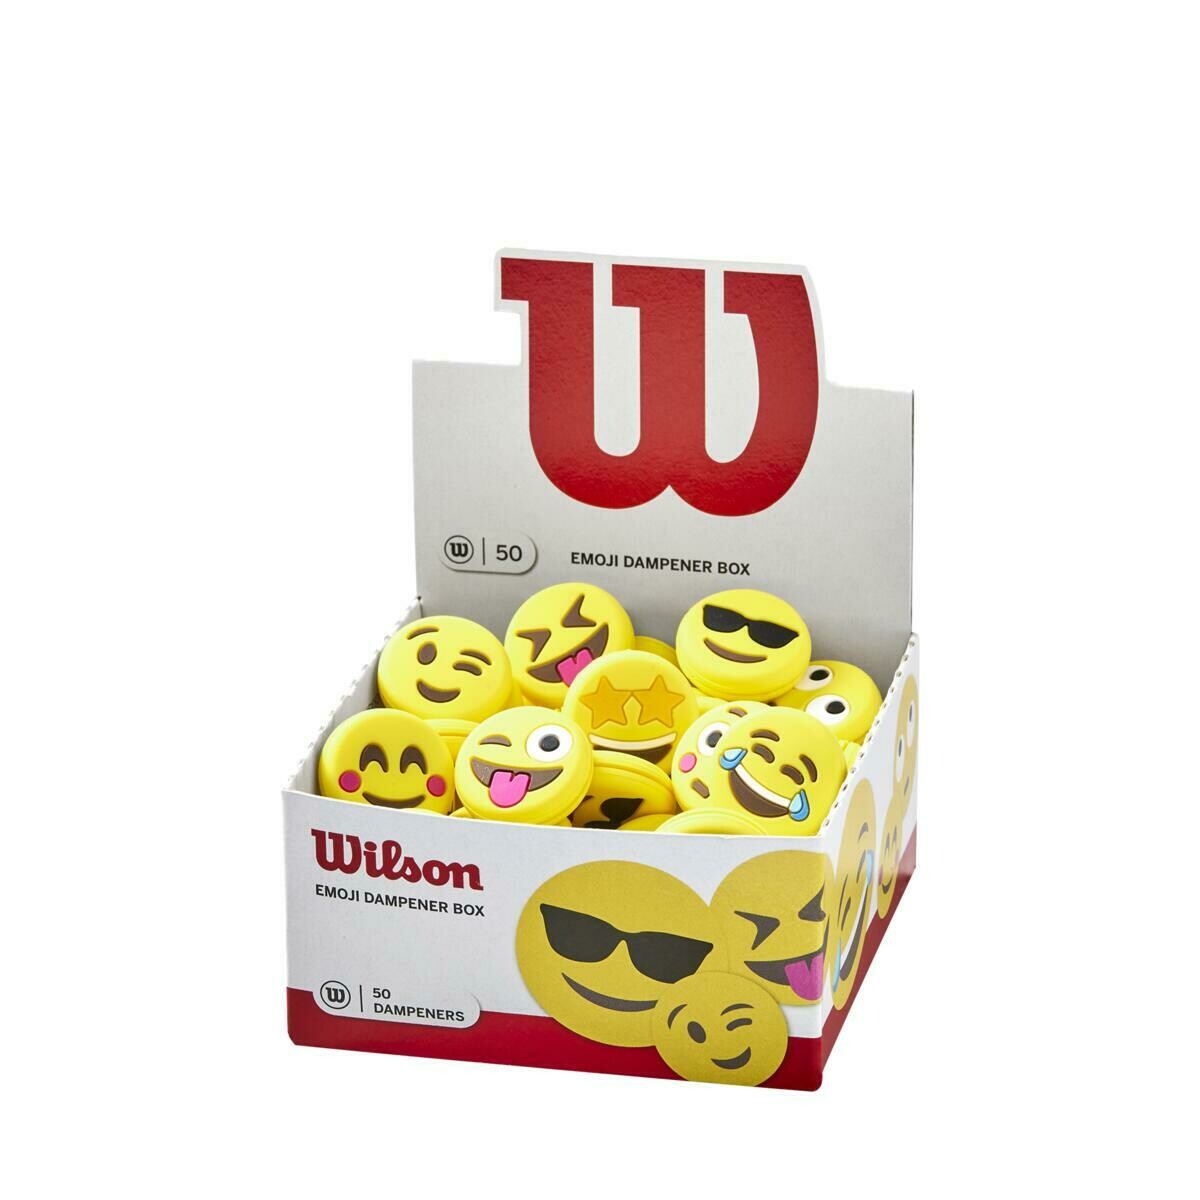 Wilson Emoji Dampener Box - 50 Pack